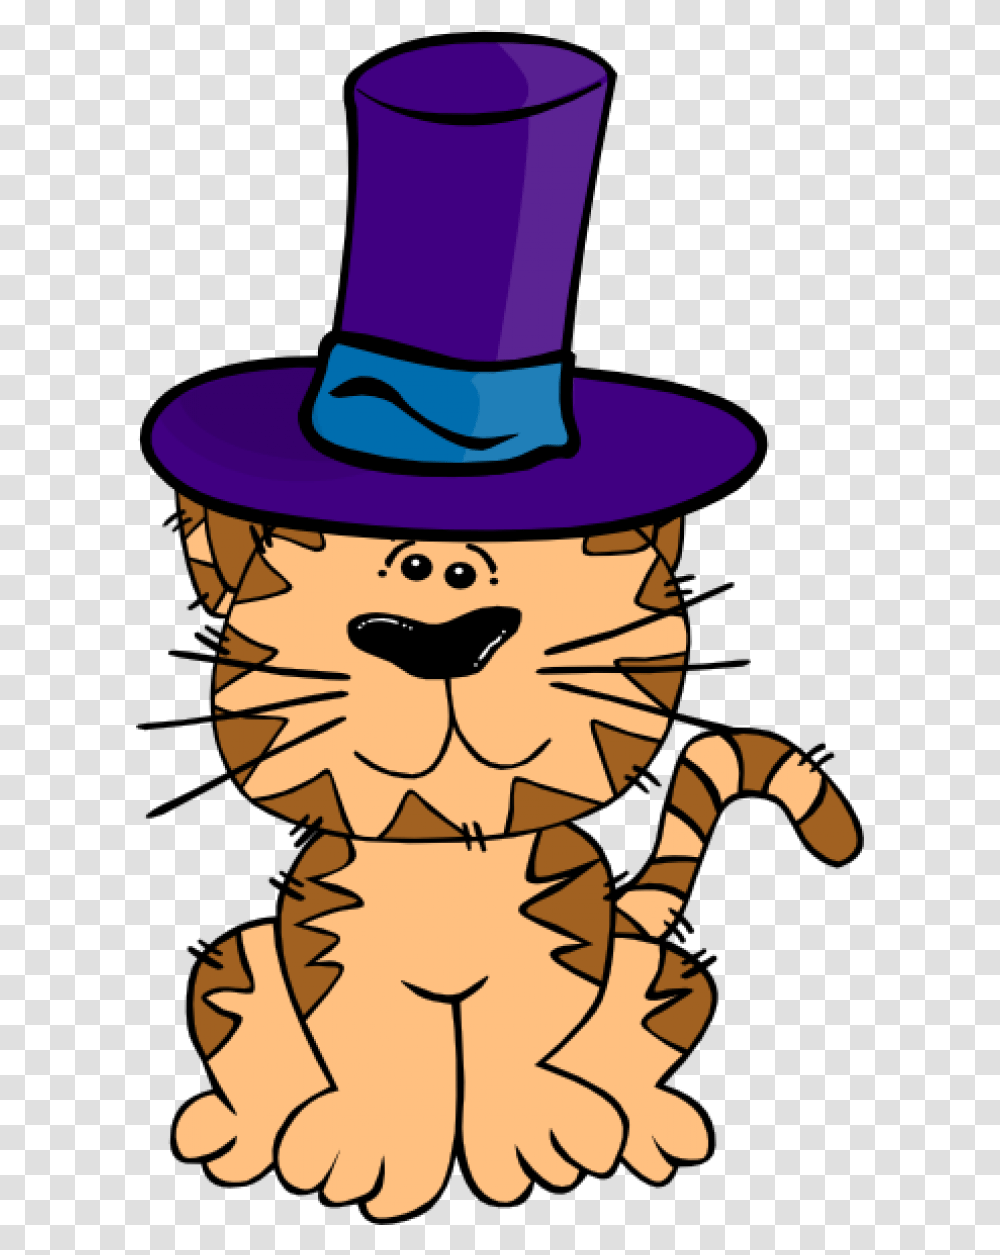 Cat With A Hat Clipart Cat In A Hat Cartoon, Apparel, Sun Hat, Cowboy Hat Transparent Png